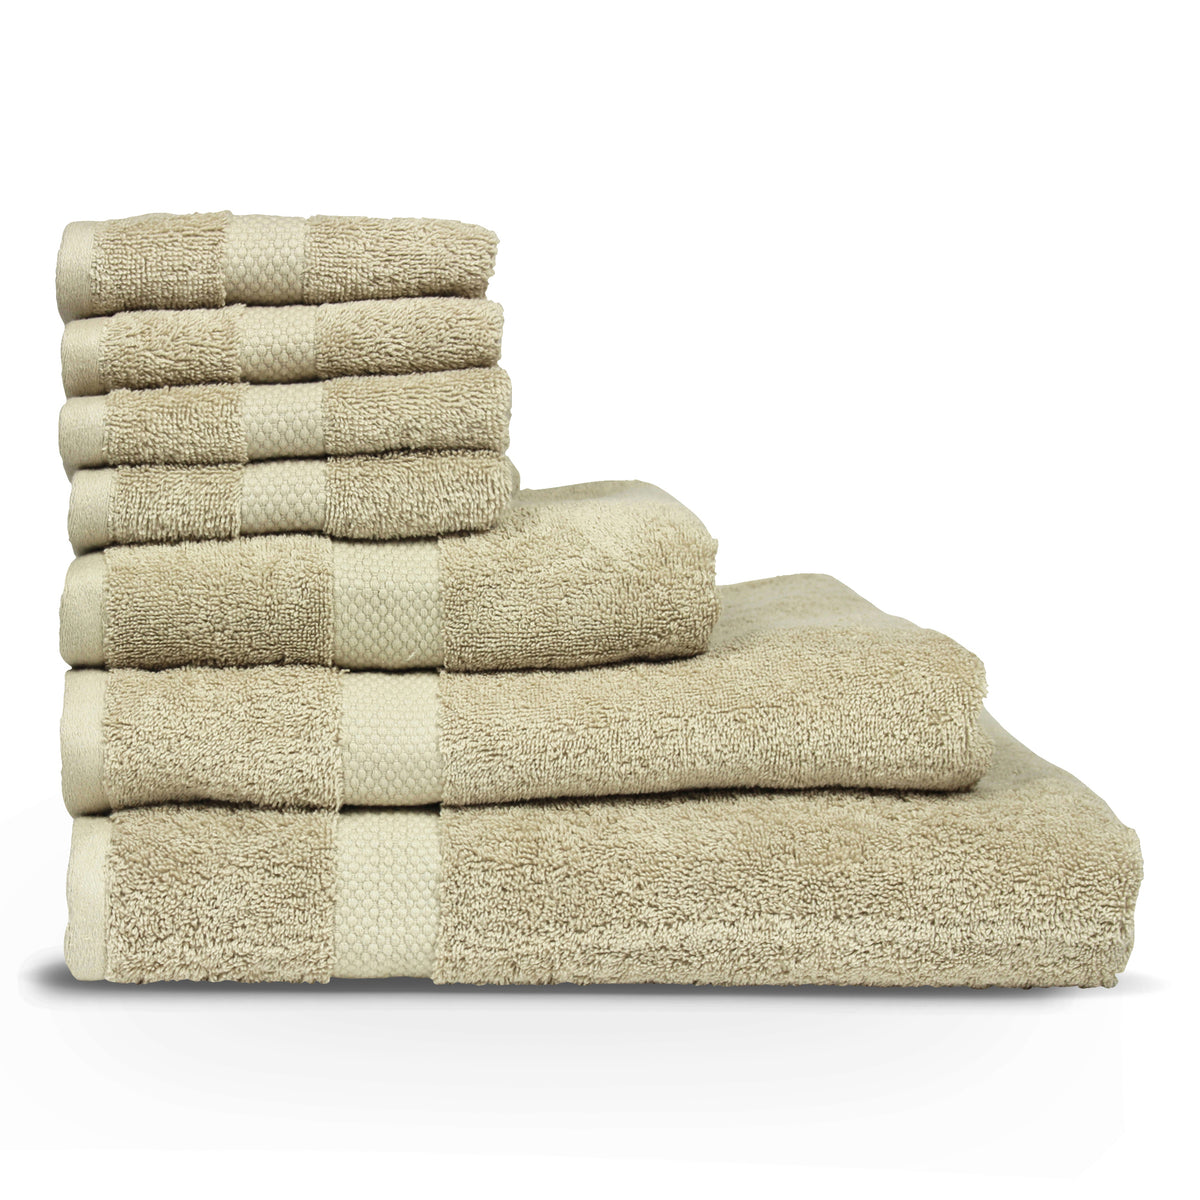 Loft 7pc Oatmeal Cotton Face / Hand / Bath / Sheet Towel Set